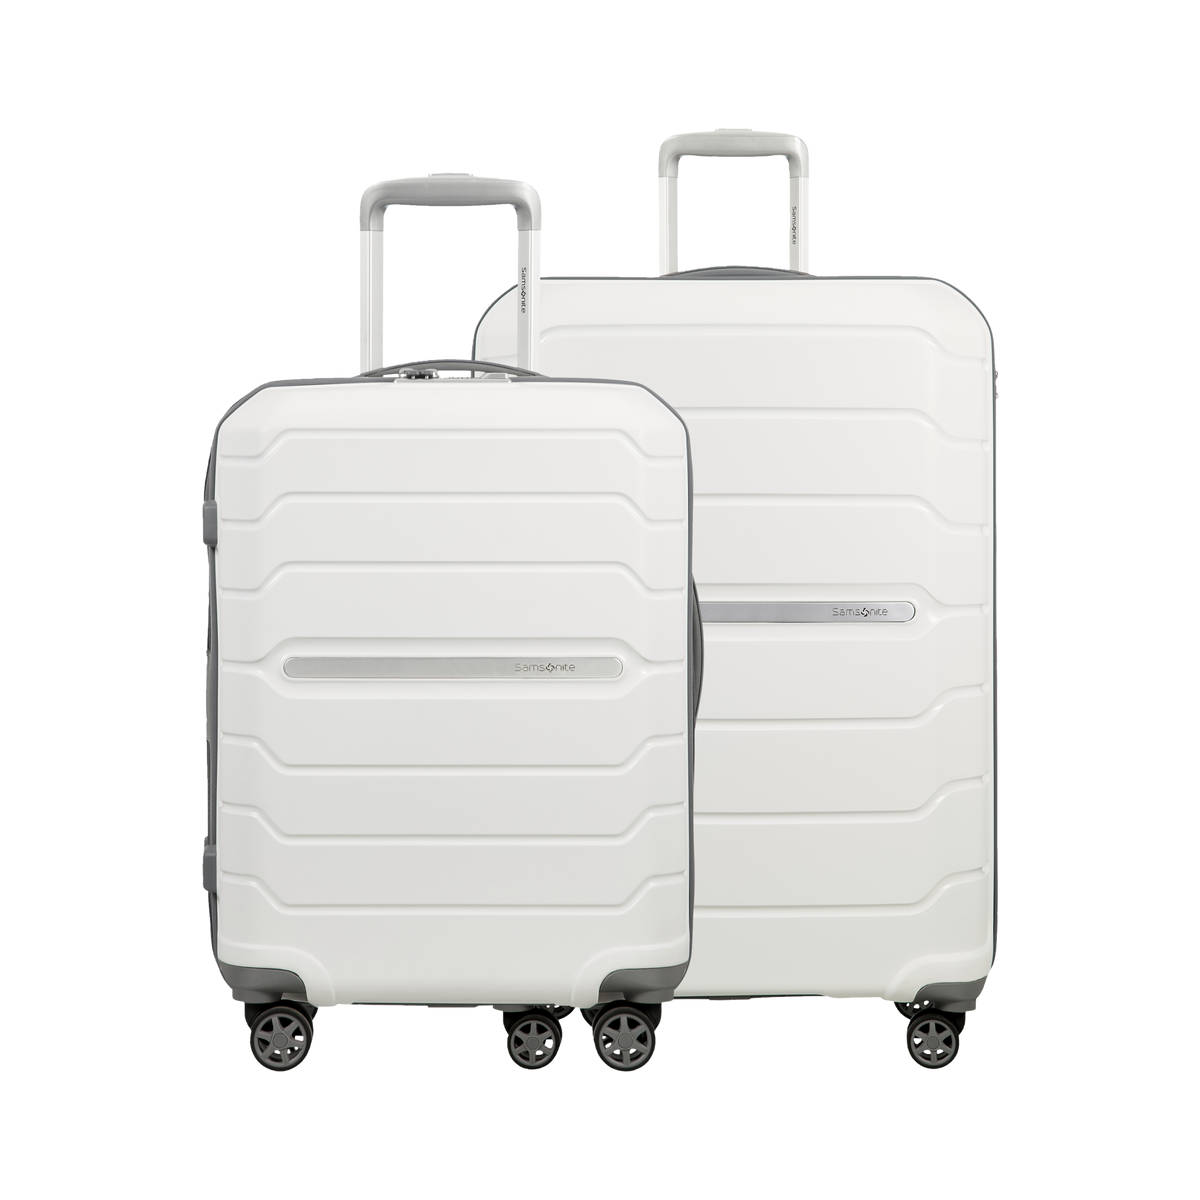 Flux Luggage set | Samsonite UK